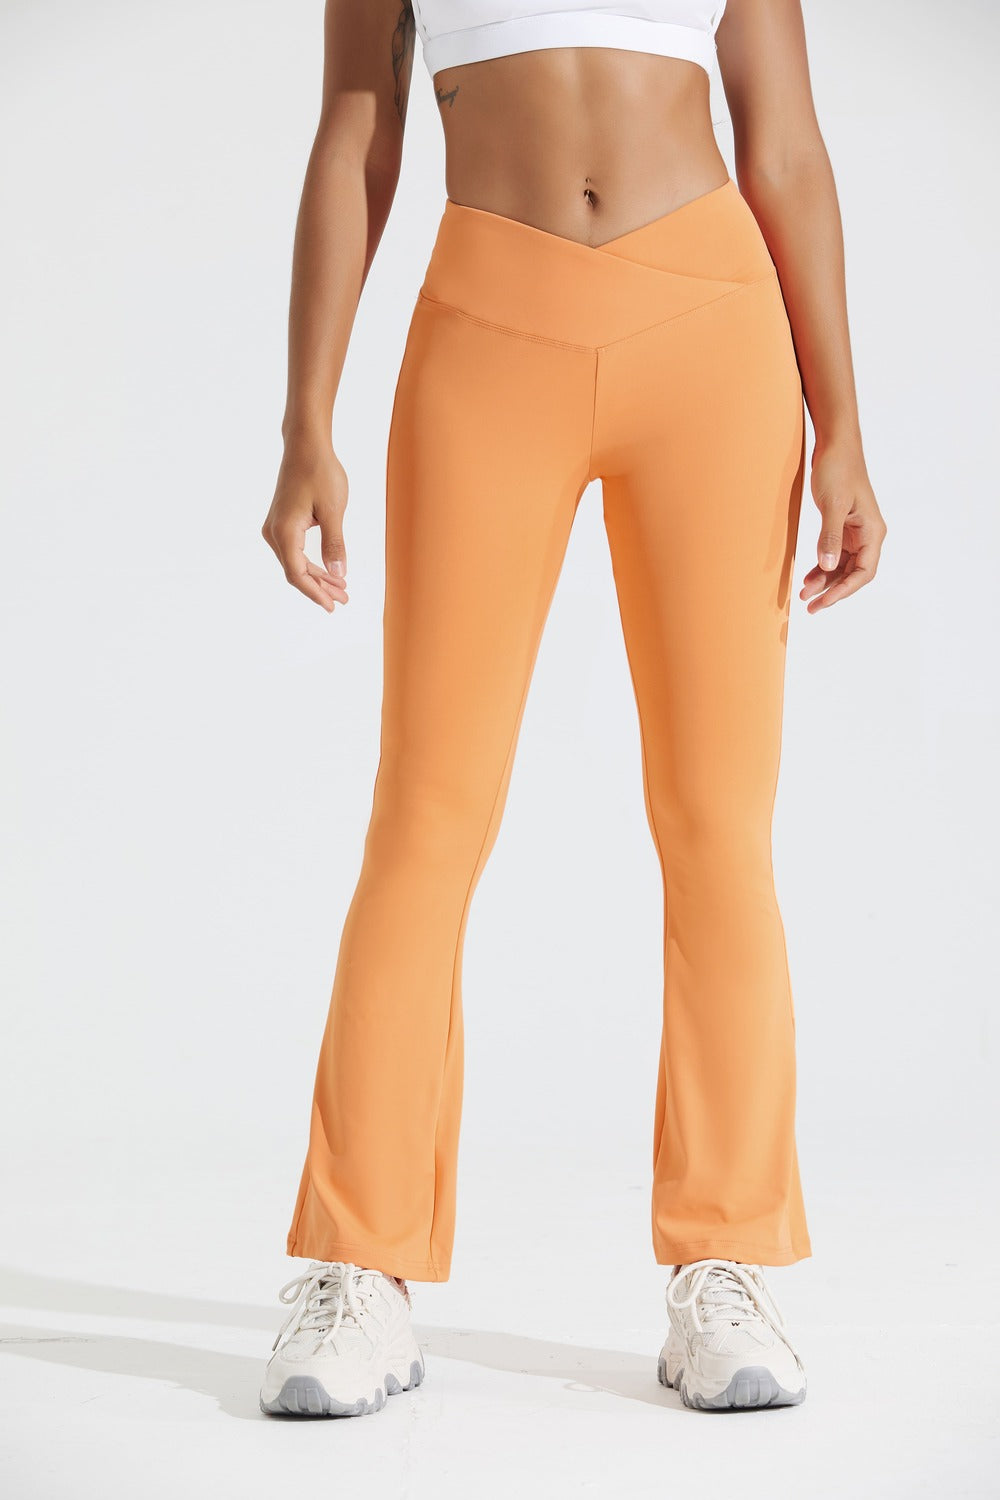 Flare Crossover Legging - LA7 ONLINE Activewear Orange / L